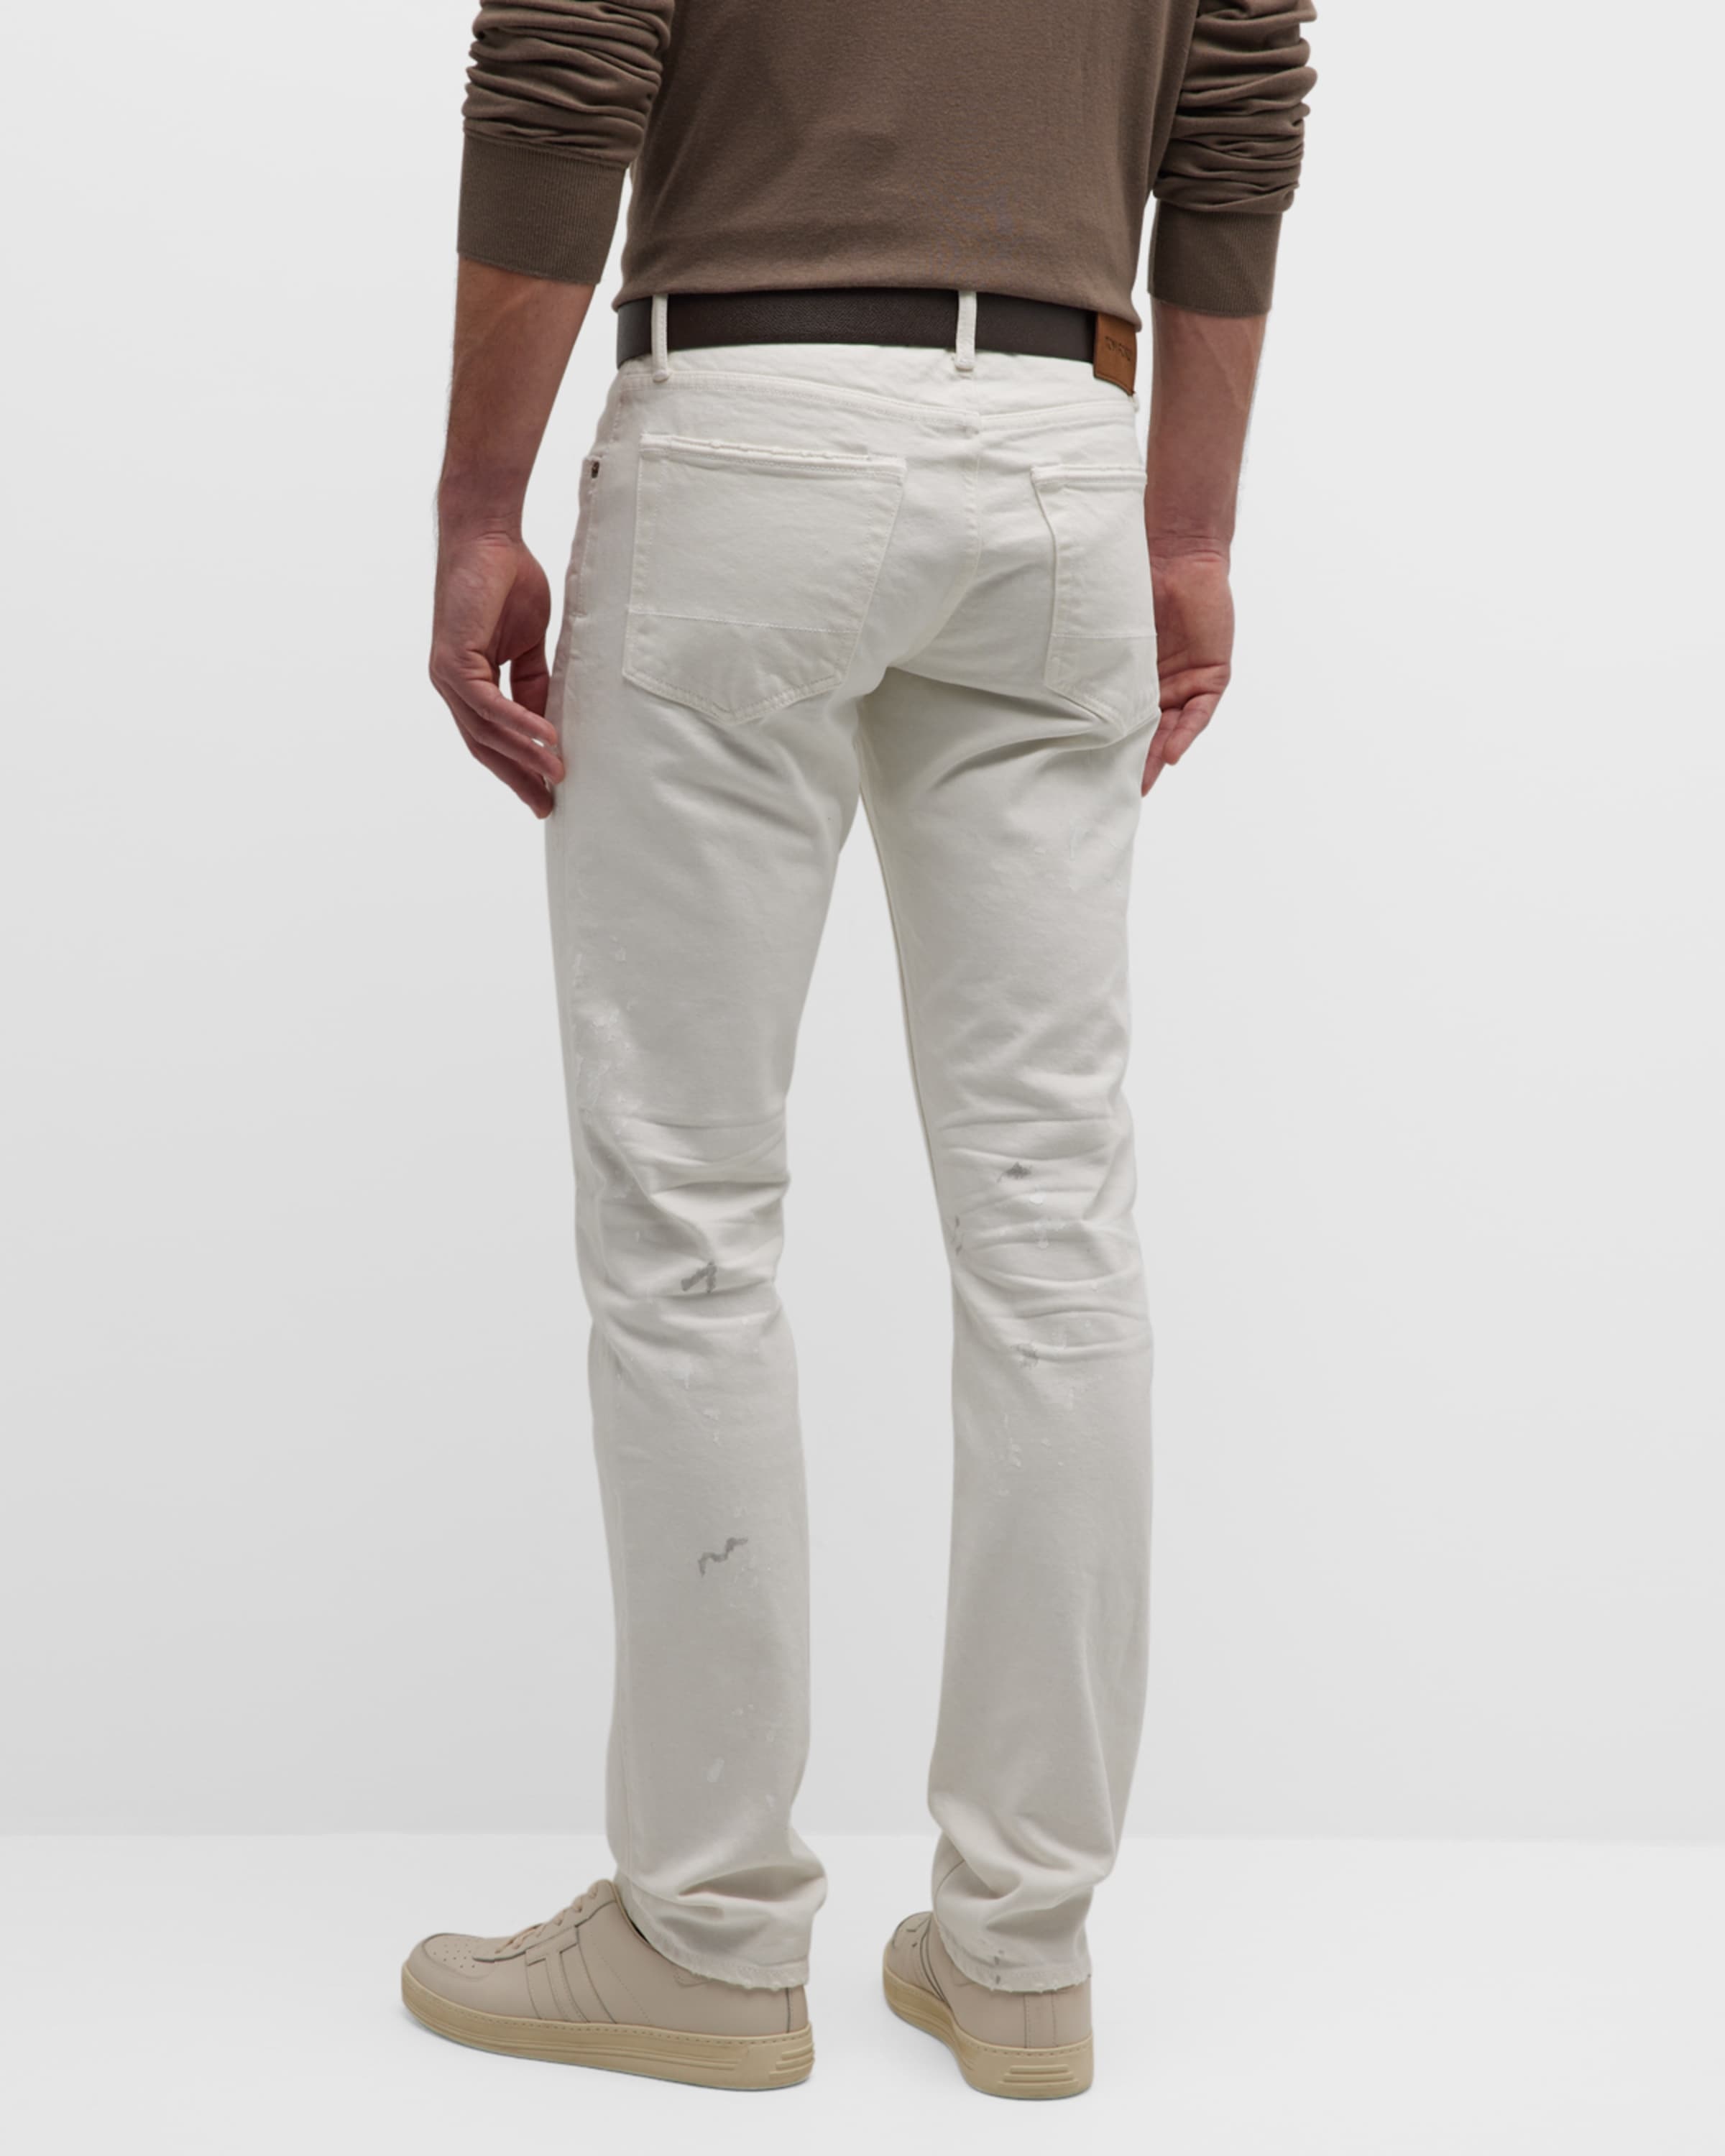 Men's Distressed Selvedge Denim Jeans - 4